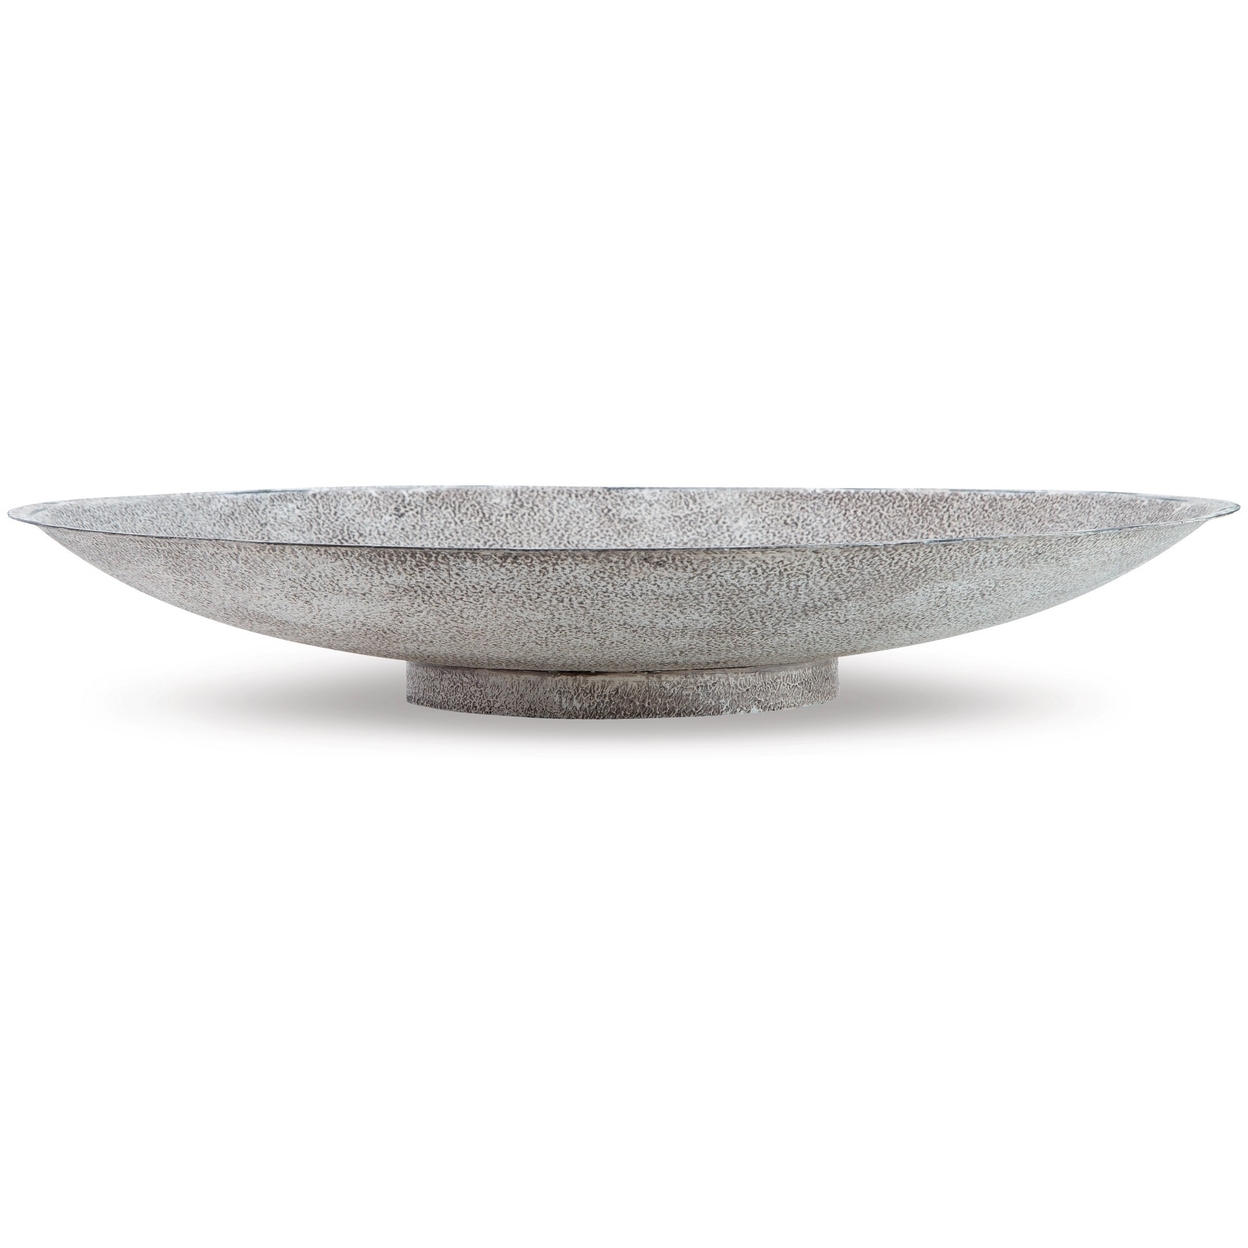 20 Inch Round Decorative Bowl With Vintage White Accent Finish, Gray Metal- Saltoro Sherpi